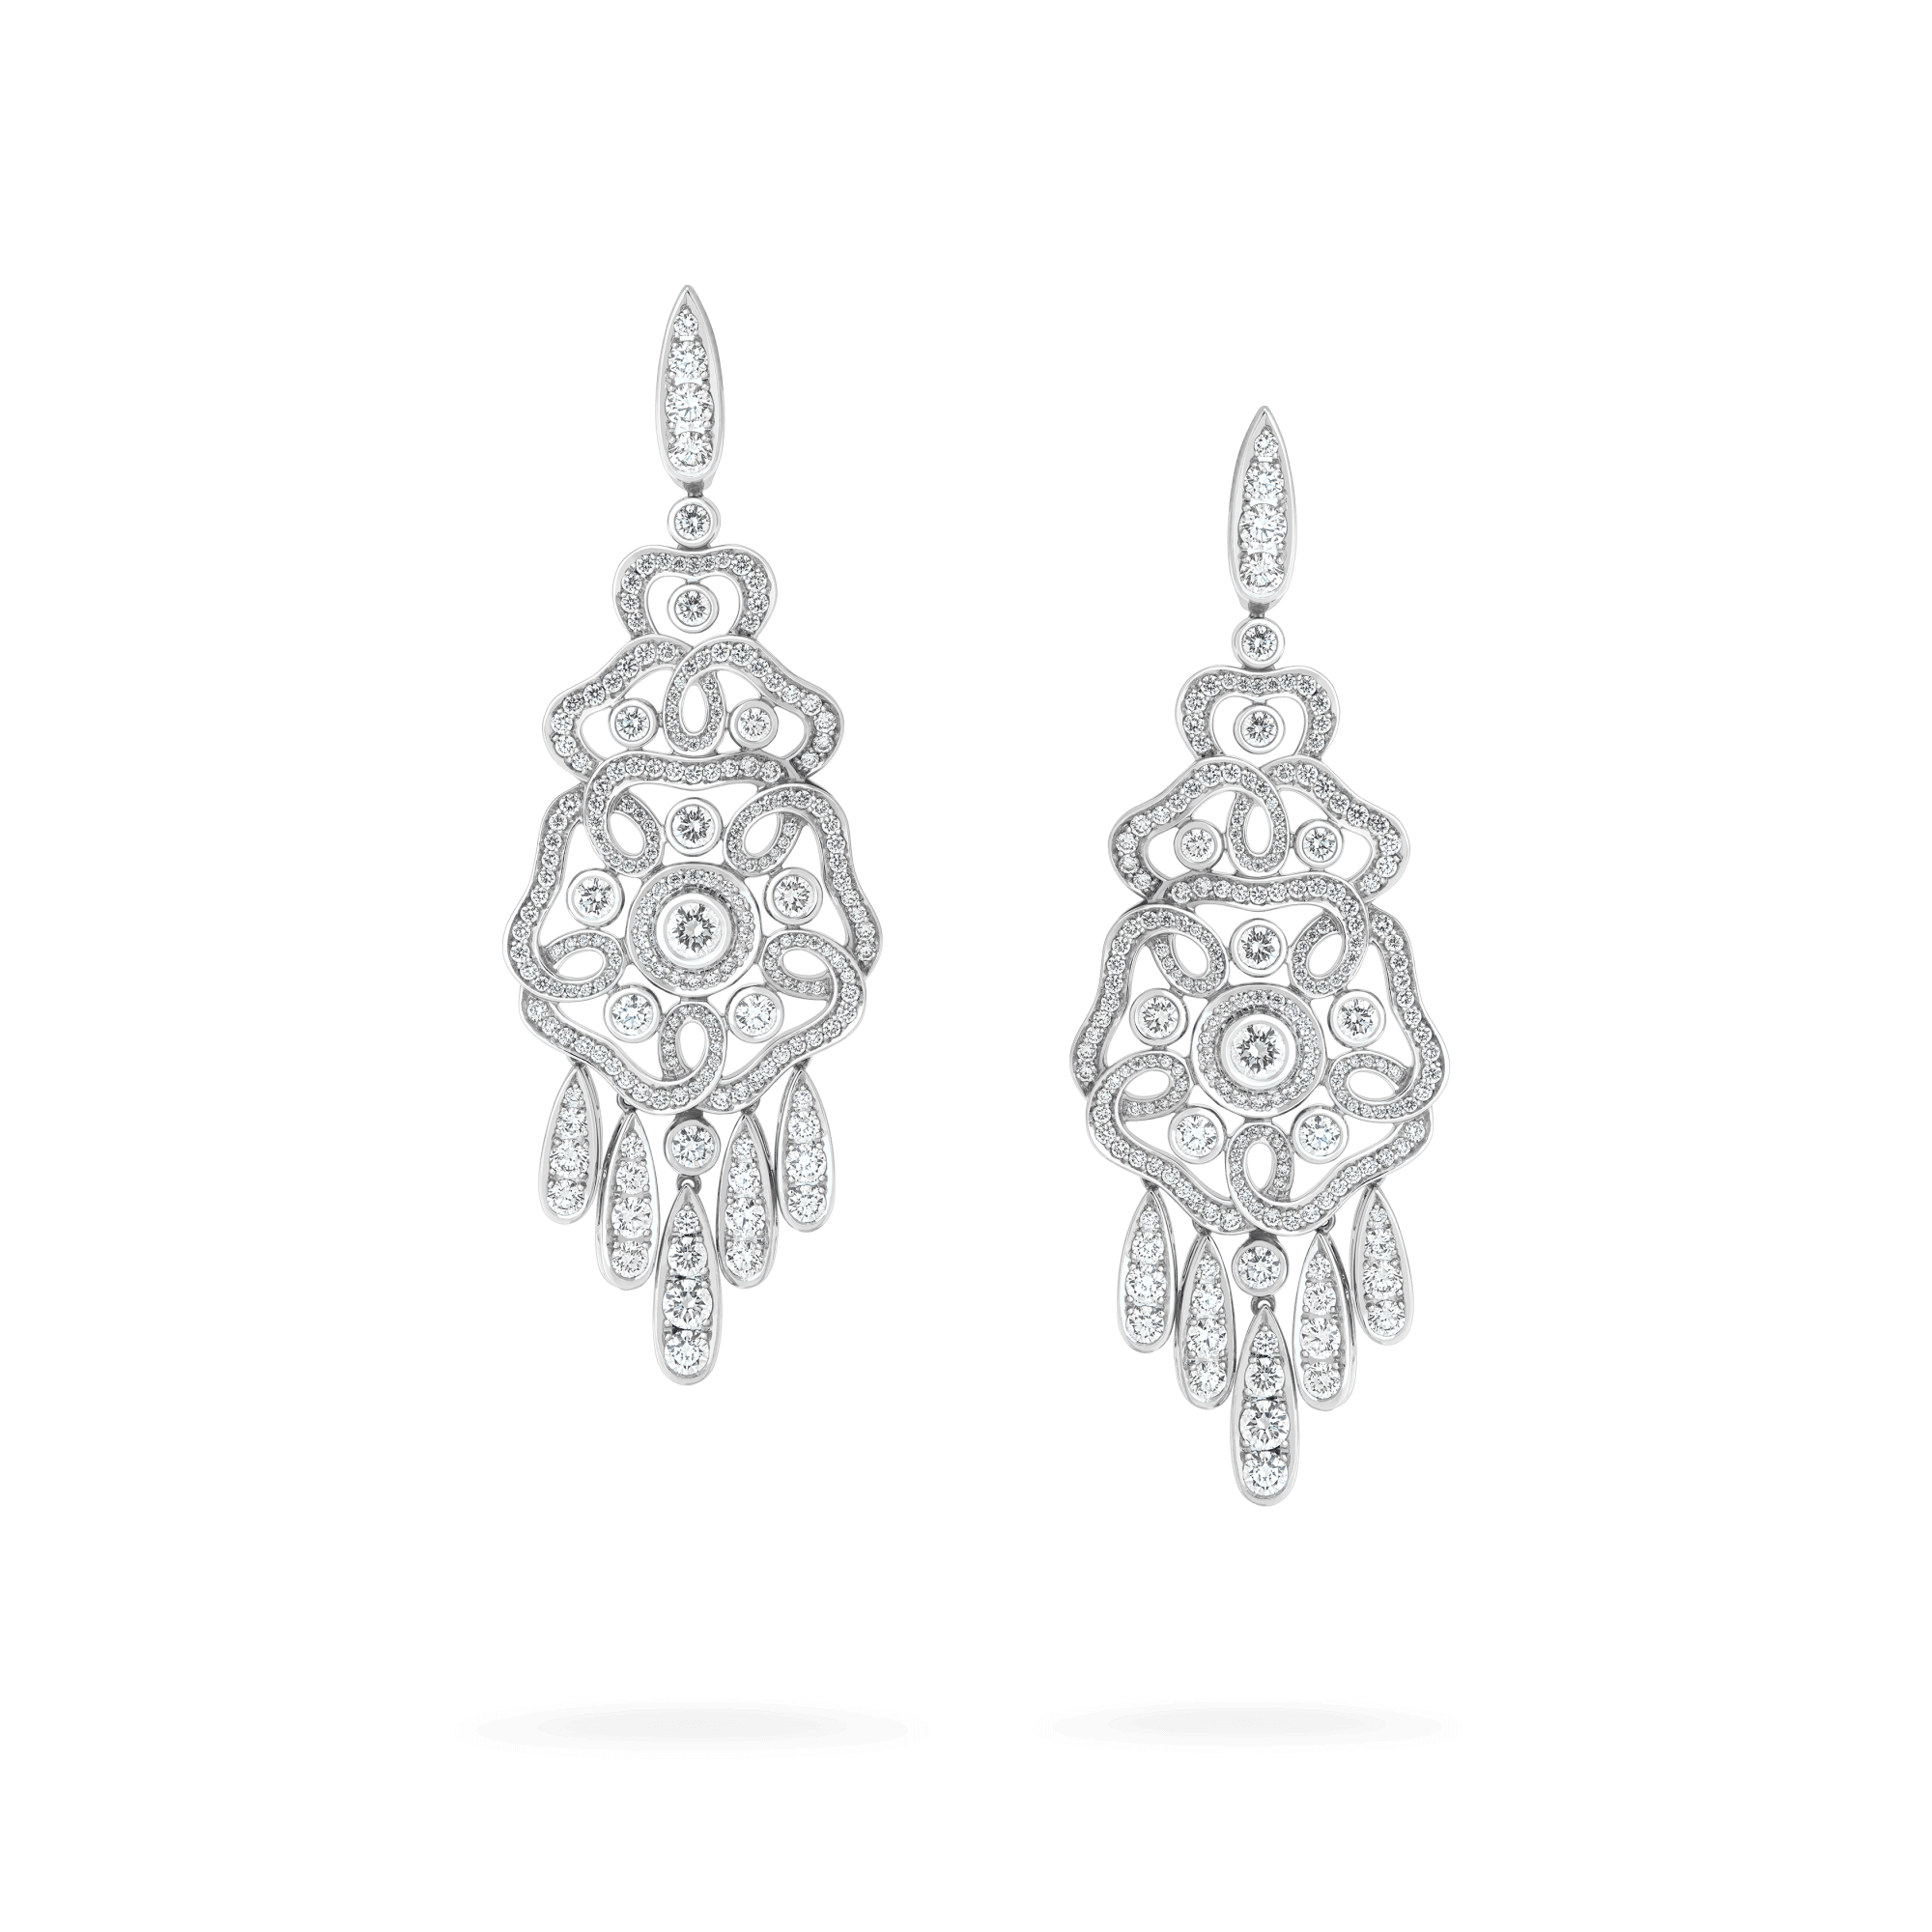 Garrard Tudor Rose Diamond Drop Earrings​ In 18ct White Gold​ 2012586 Hero